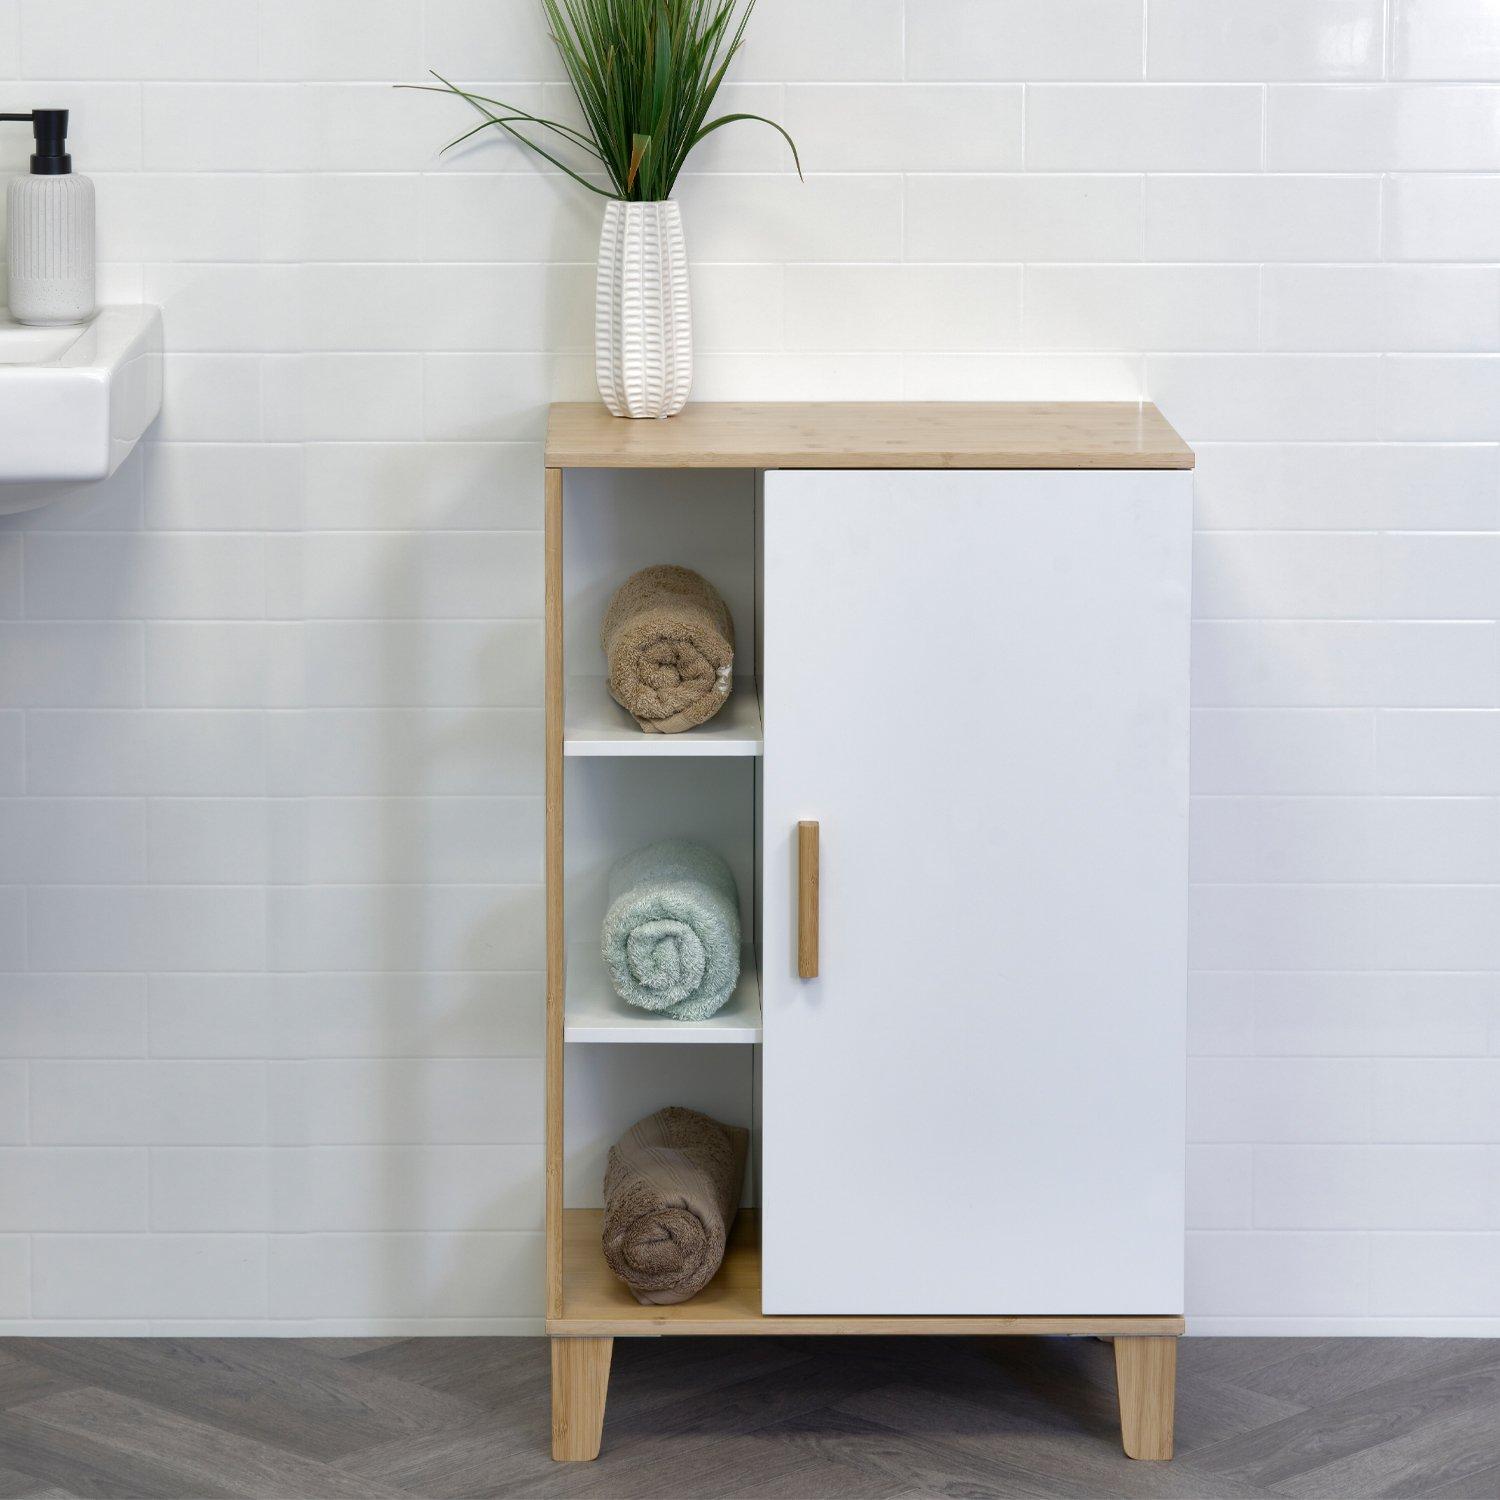 'Varallo' Single Floor Standing Bathroom Cabinet with Display Shelves